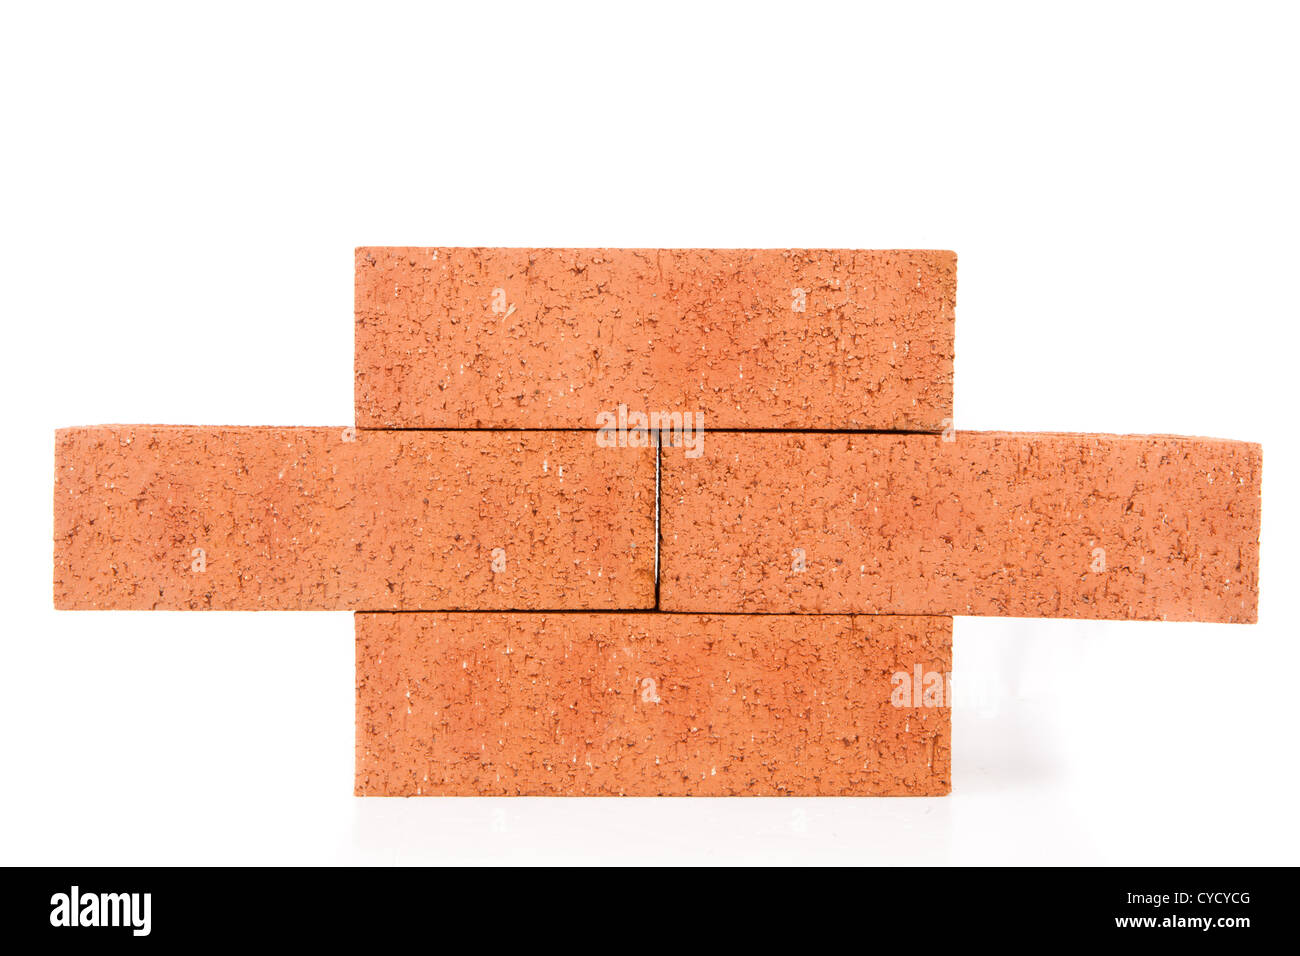 Four clay bricks building a wall Stock Photo